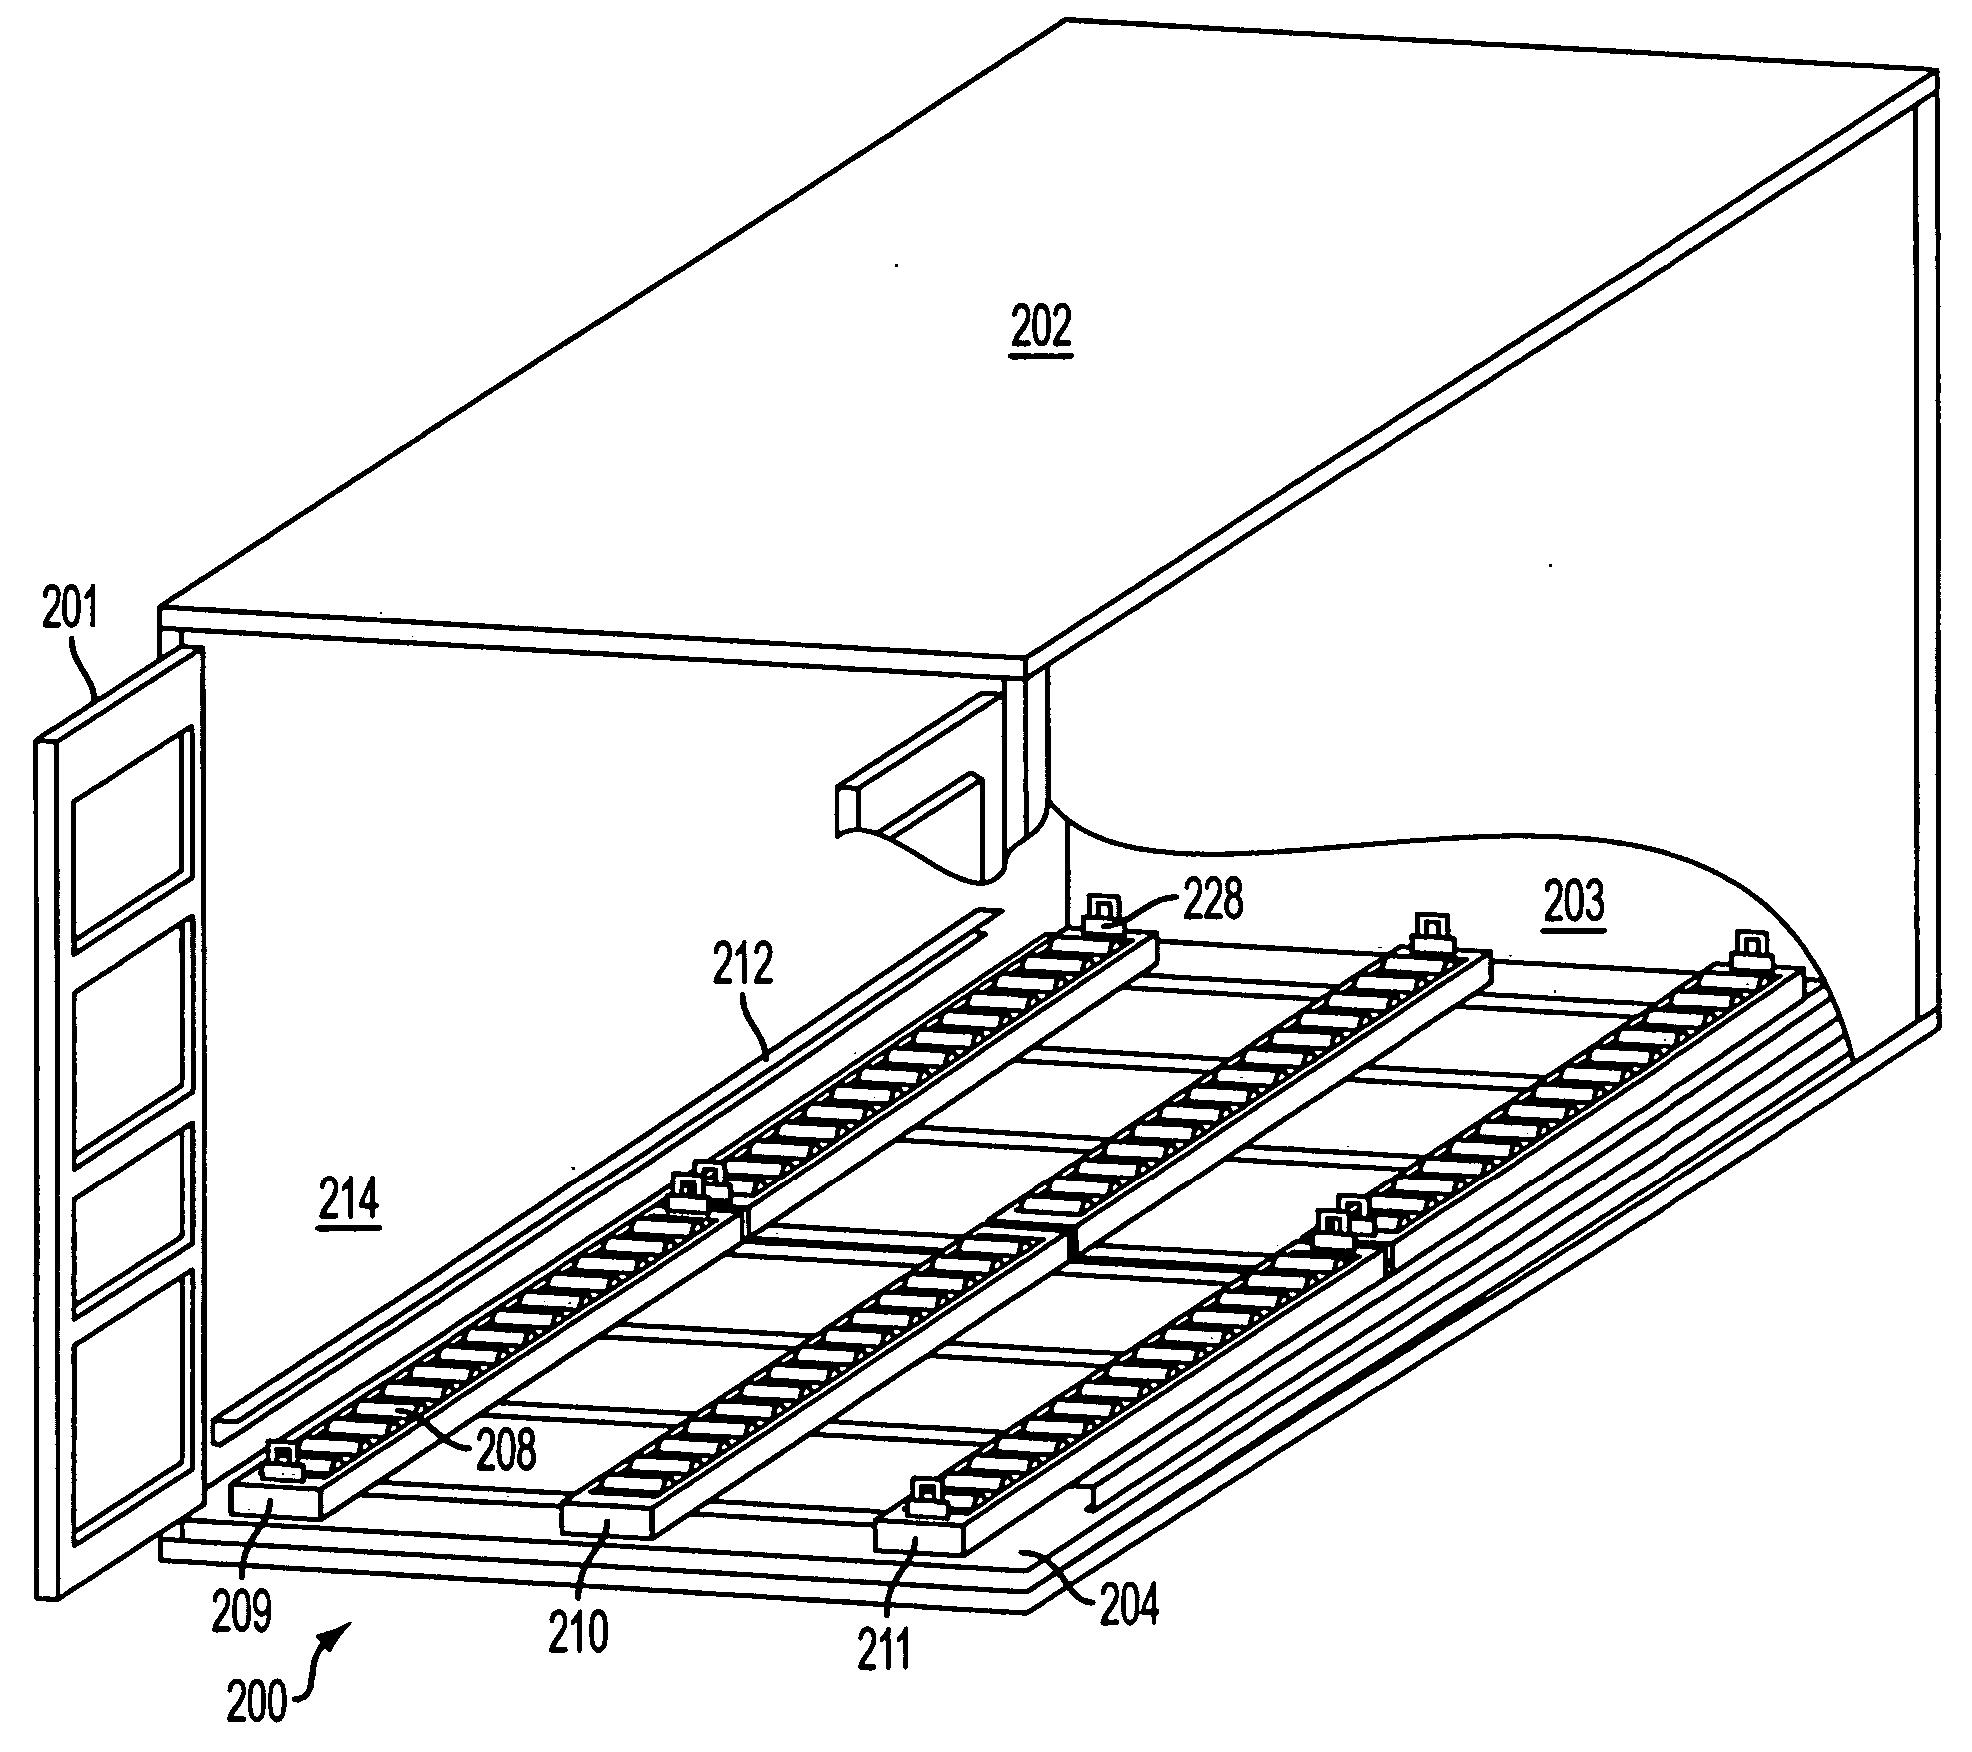 Cargo roller system for cargo handling